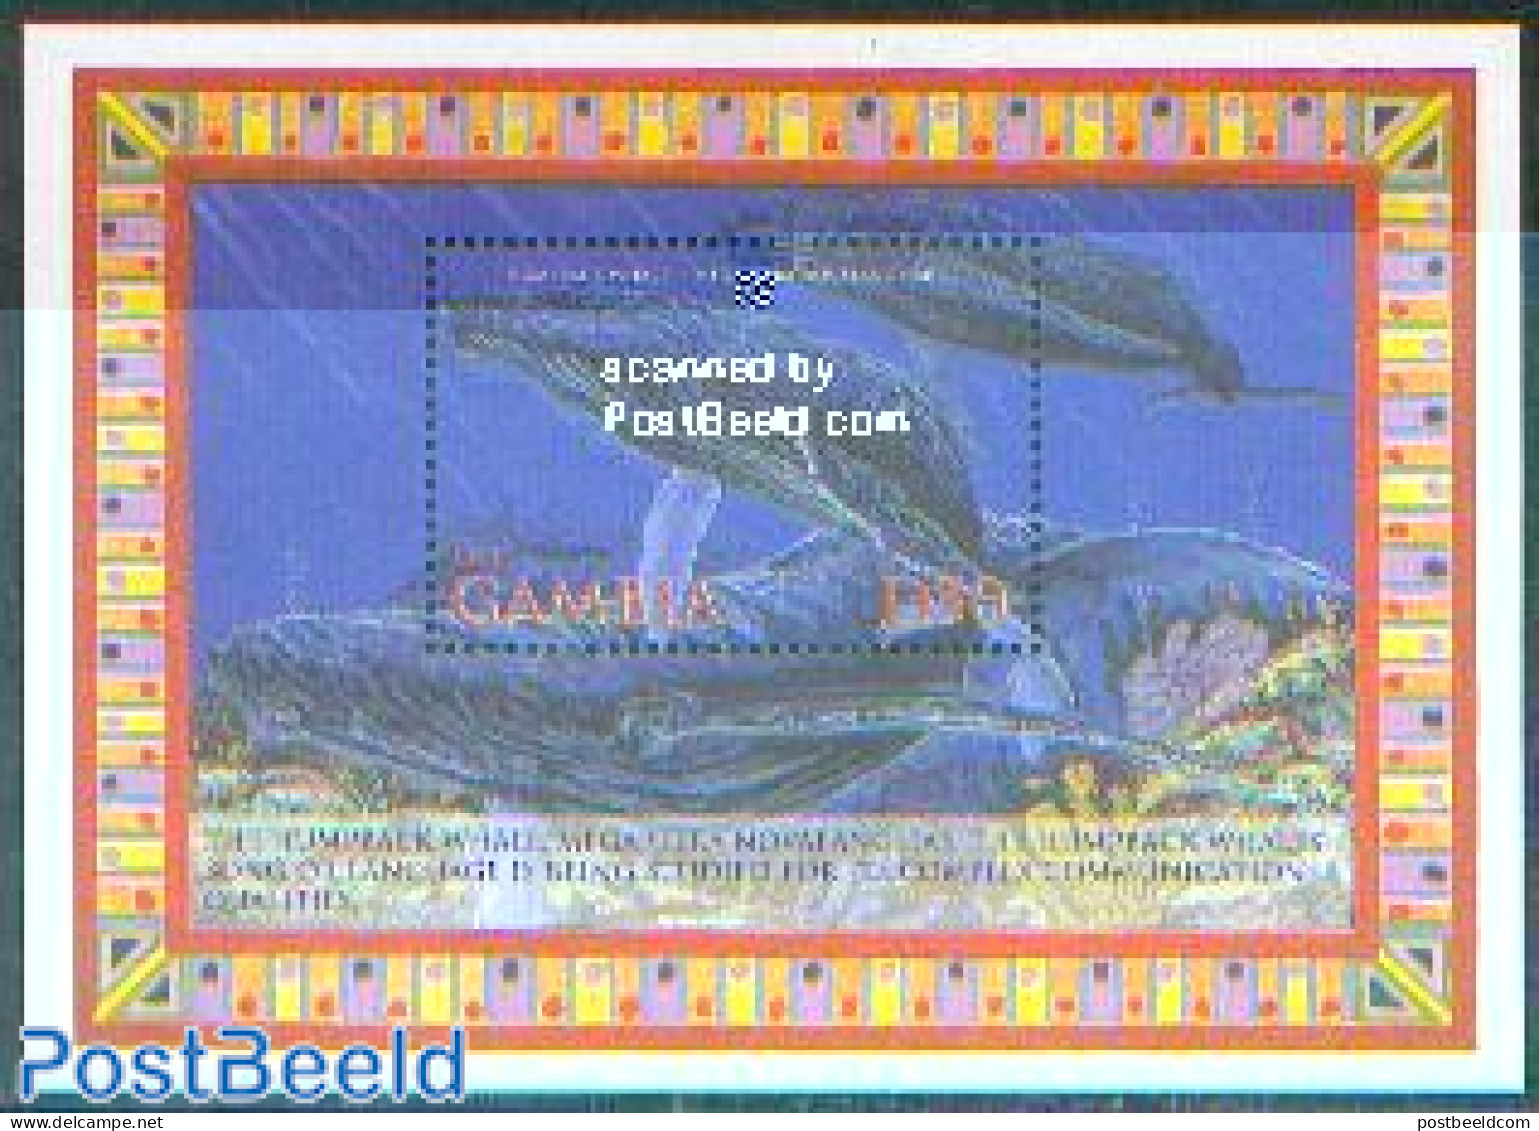 Gambia 2002 Humpback Whale S/s, Mint NH, Nature - Sea Mammals - Gambie (...-1964)